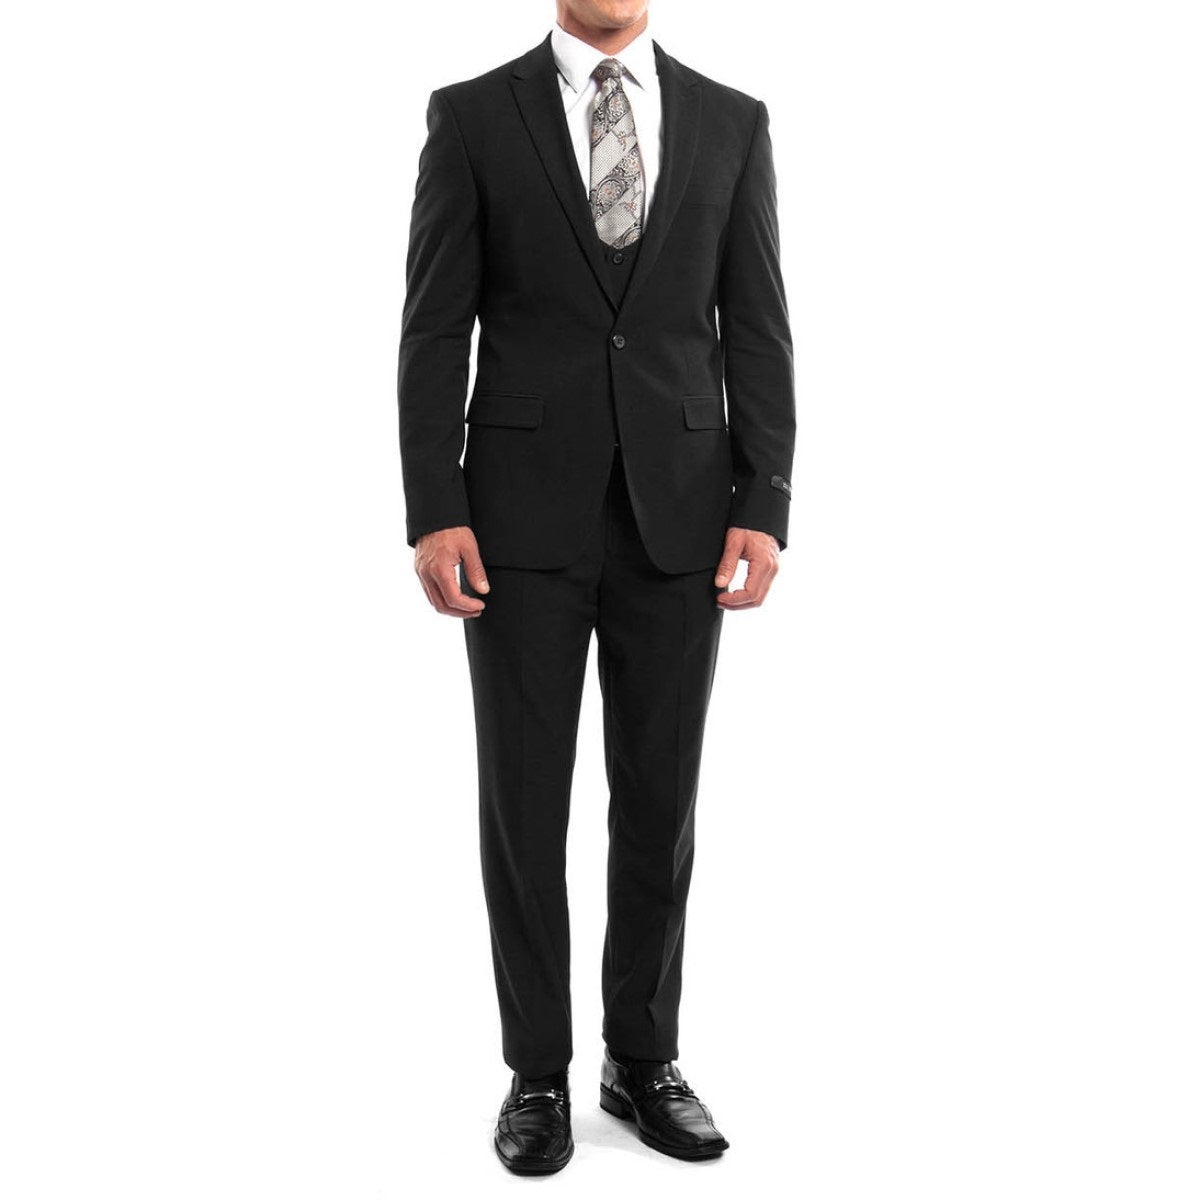 Traje Formal para Hombre TA-M255US-01 Black - Formal Suit for Men